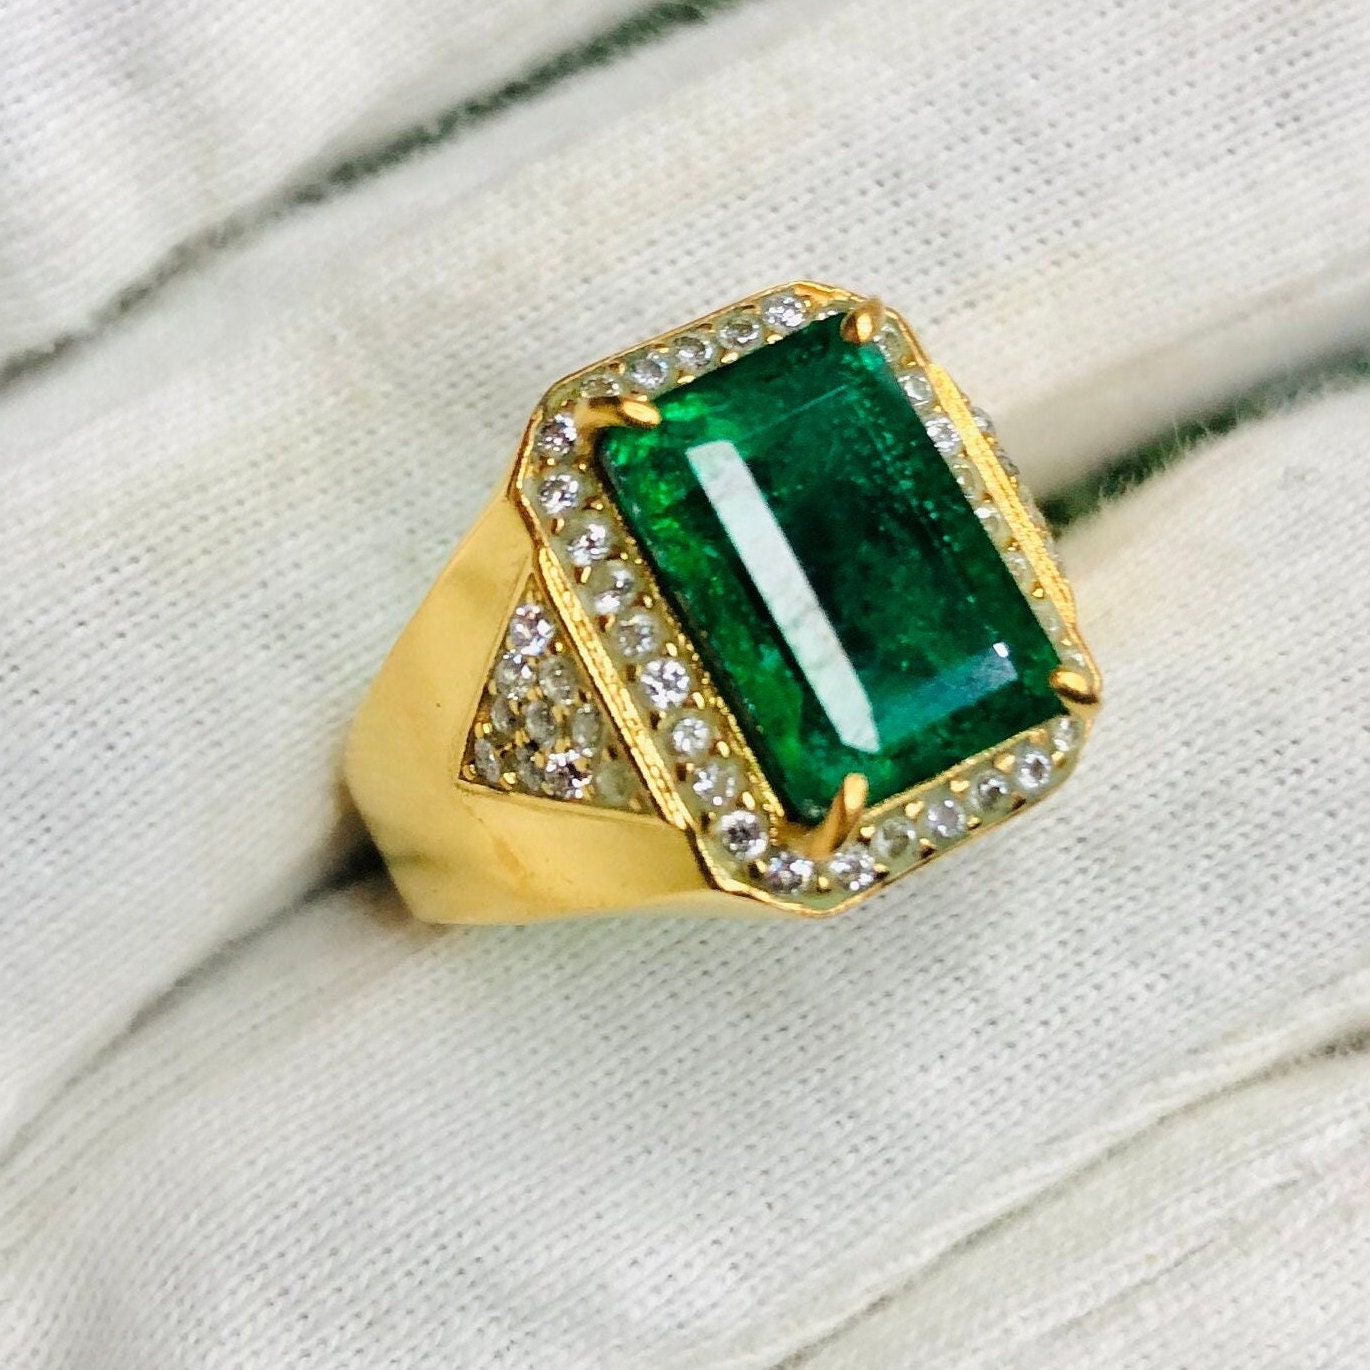 2.80 Carats Natural Emerald Men's Ring In 18K Solid Gold / Men's Wedding  May Birthstone Ring / Emerald Cut Mens Ring